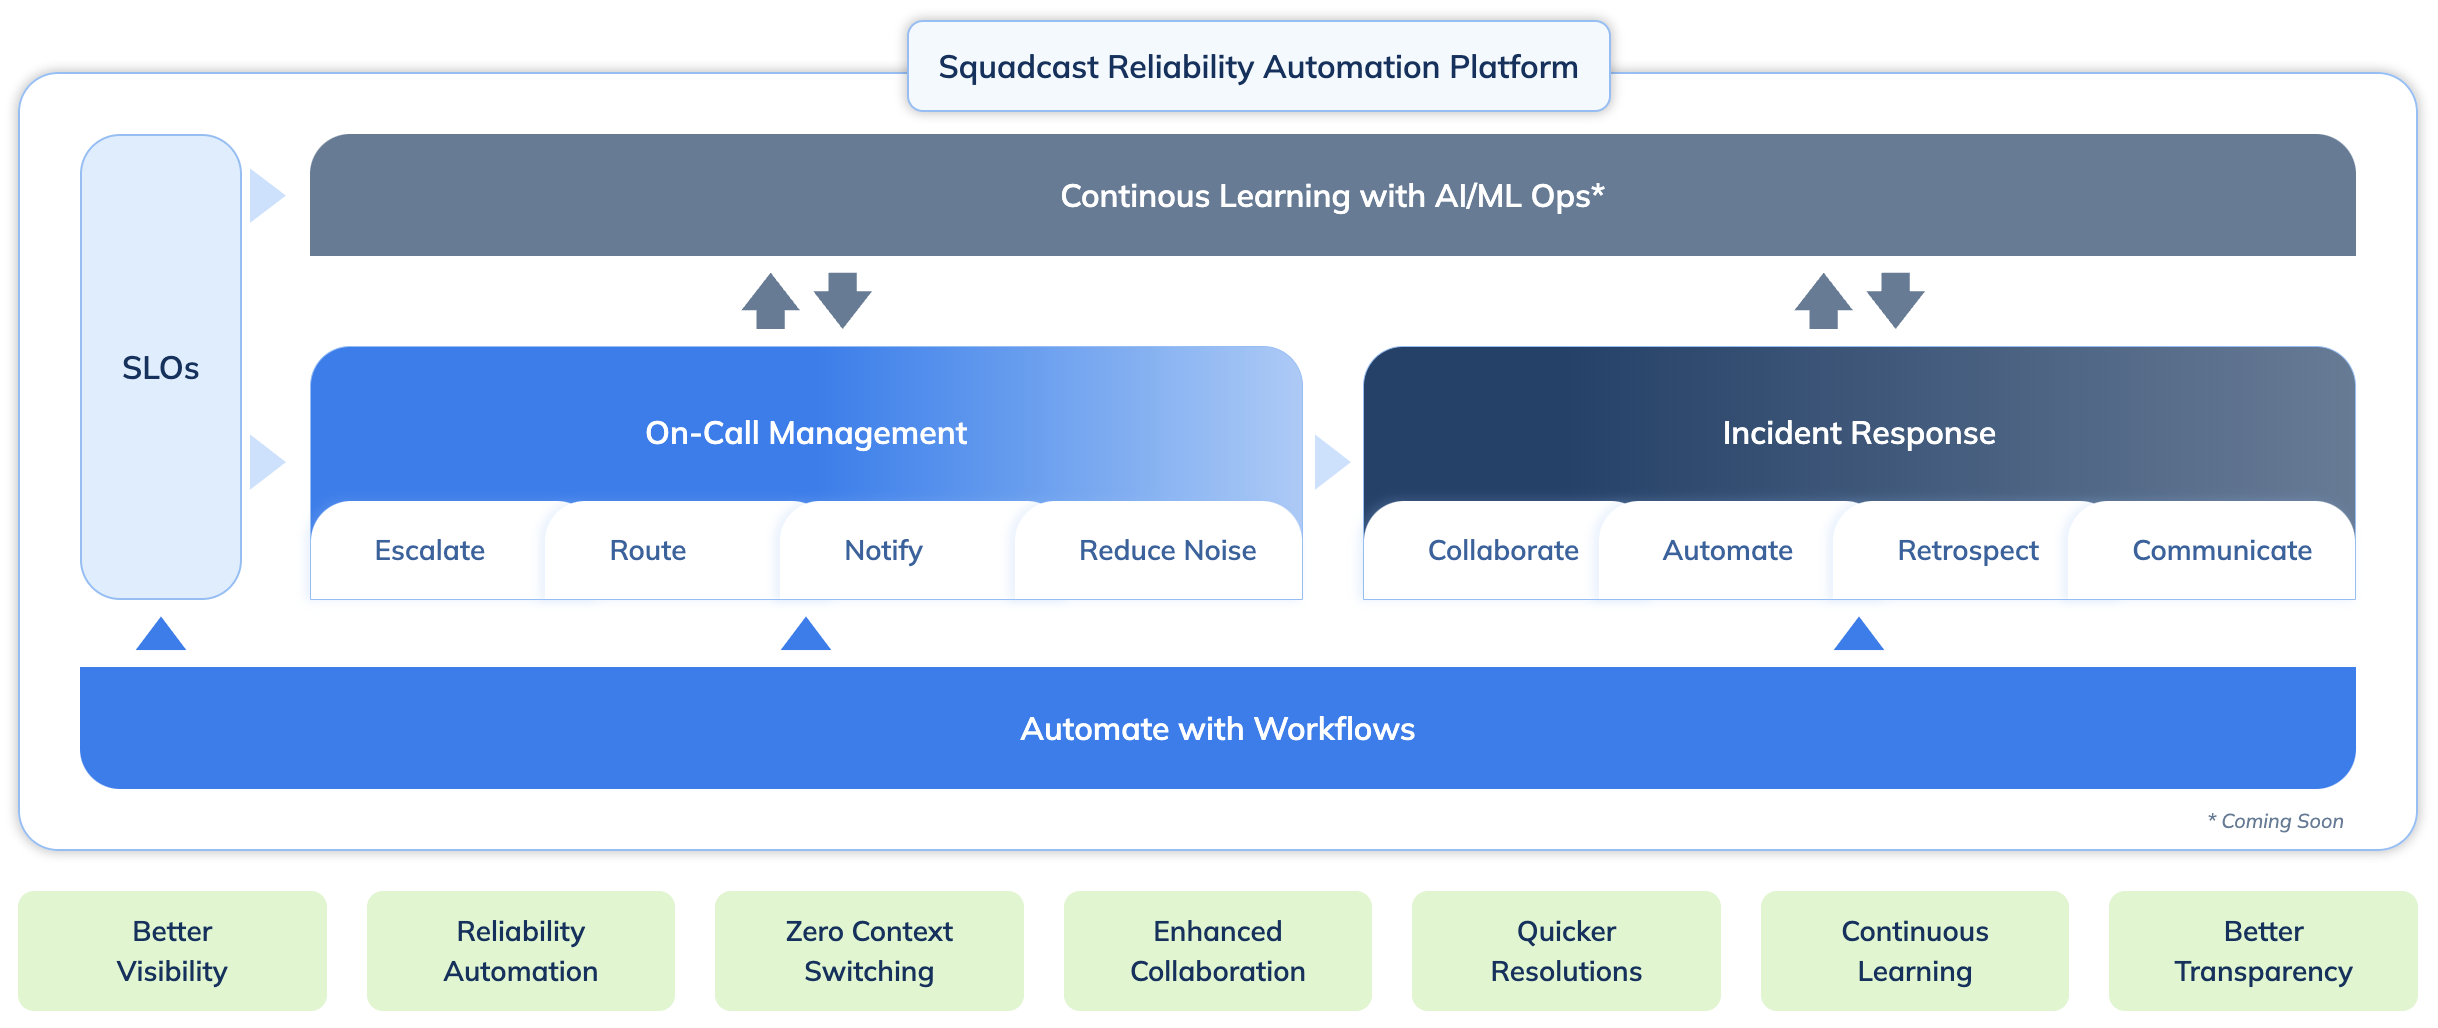 squadcast reliability automation platform